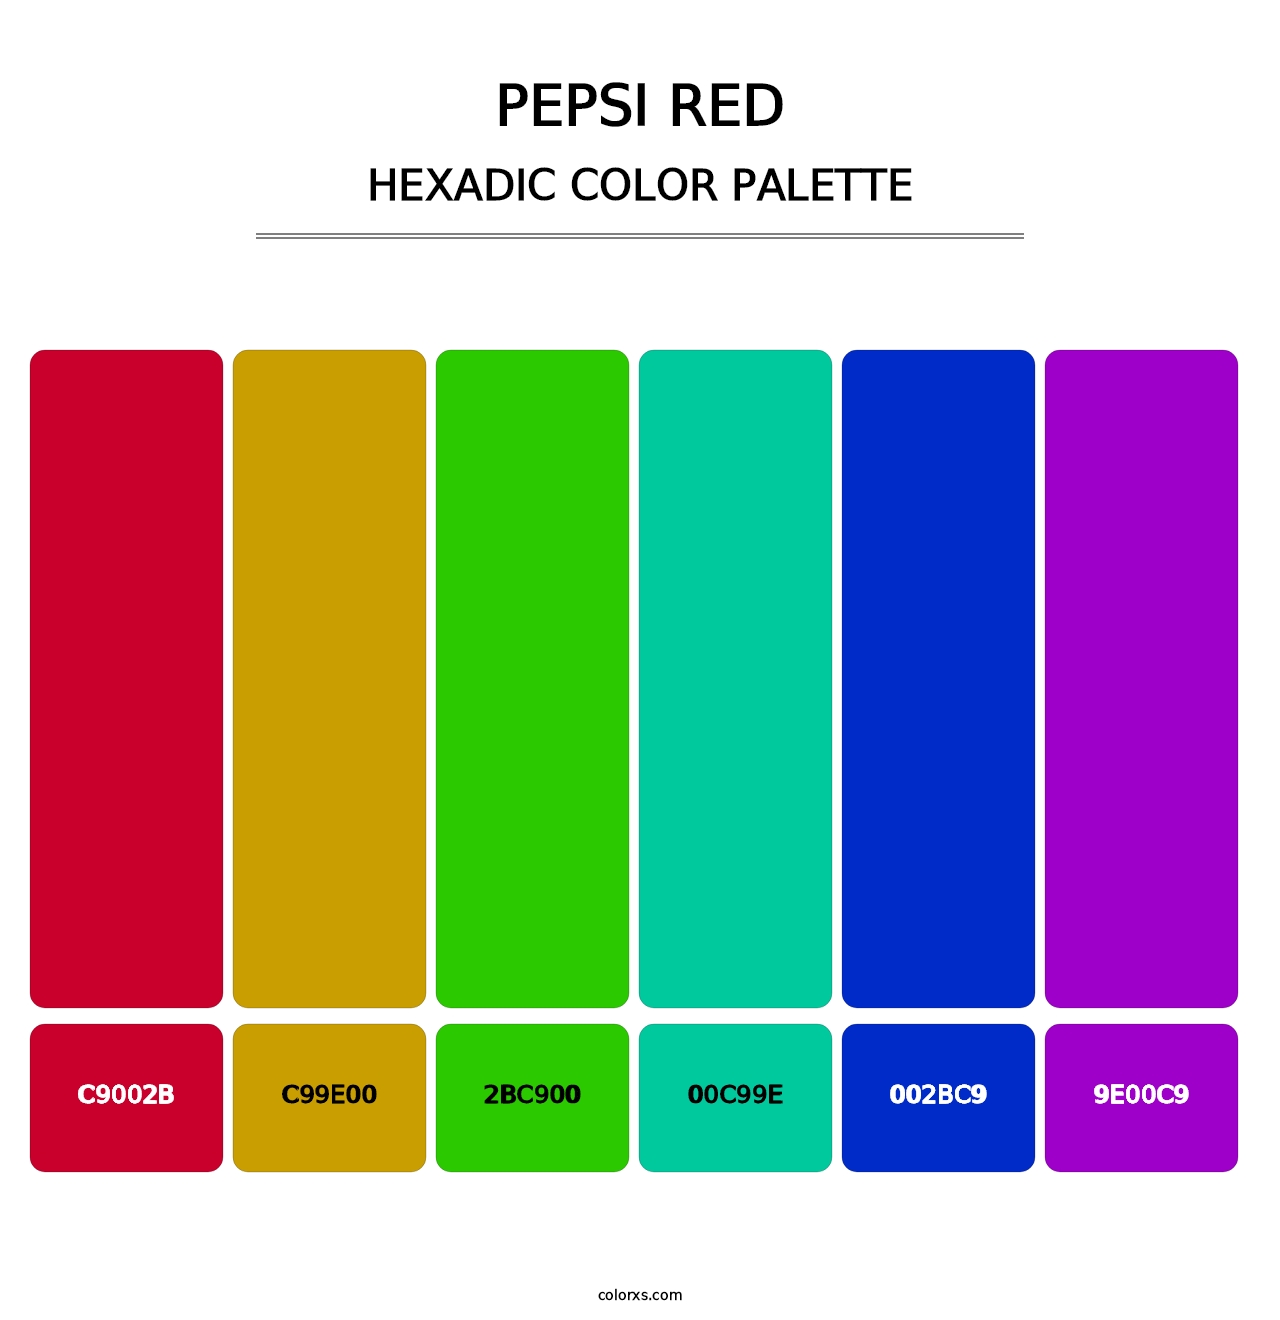 Pepsi Red - Hexadic Color Palette